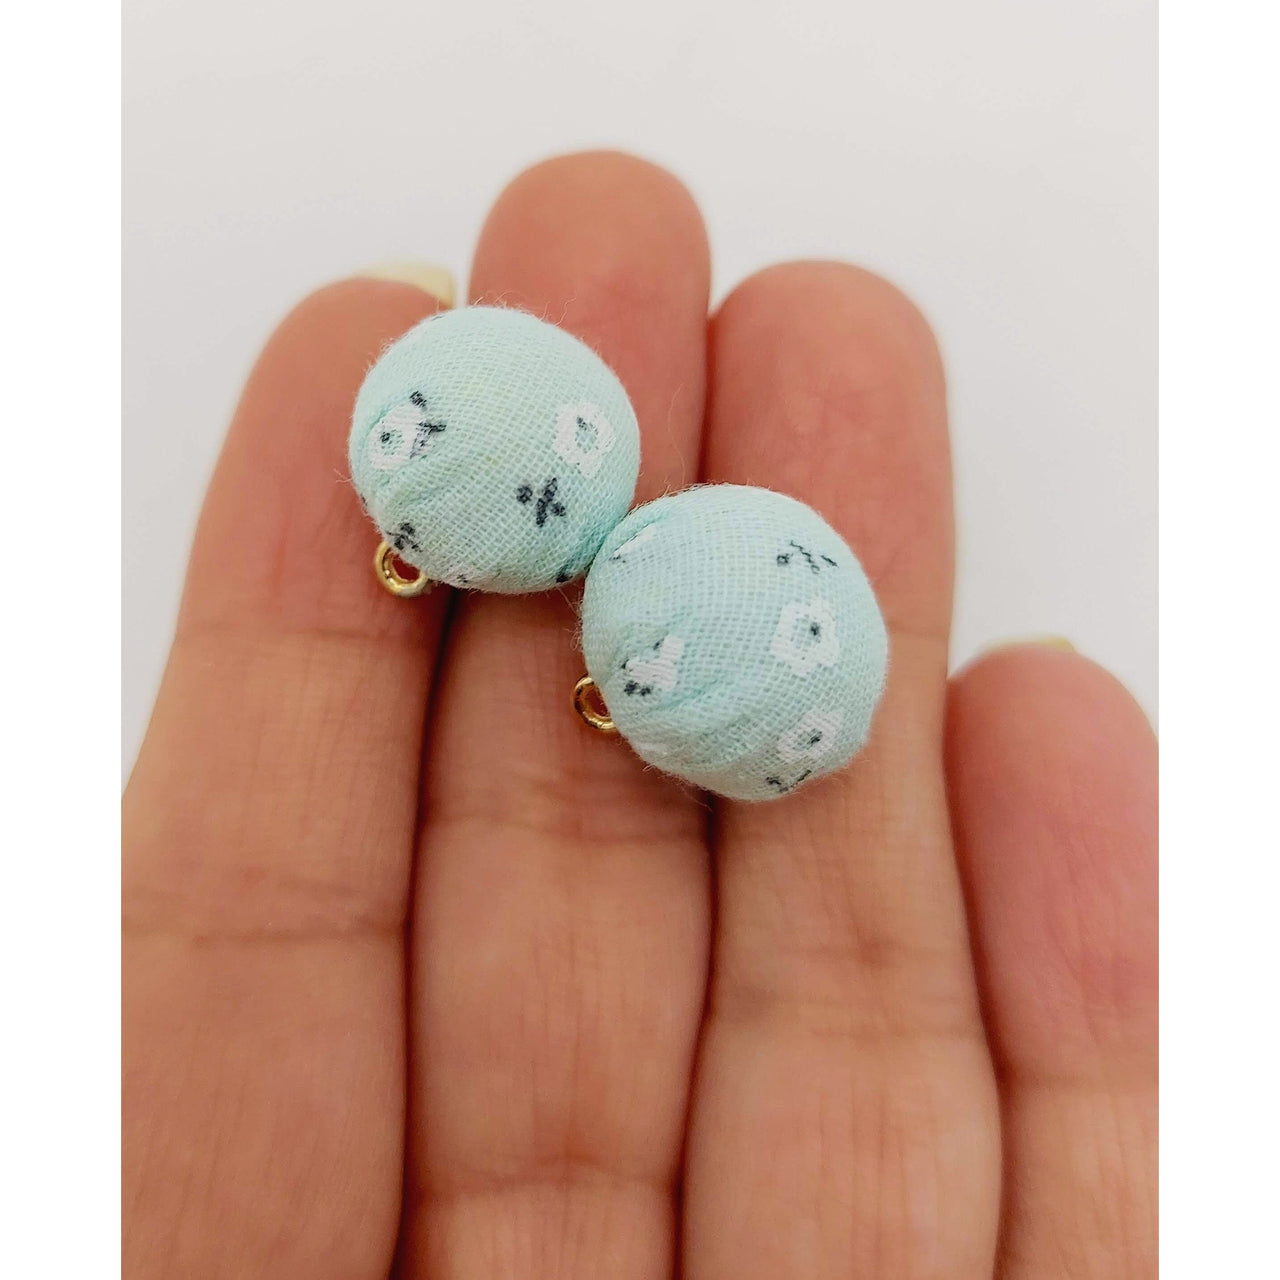 Aqua Blue Floral Printed Cotton Fabric Ball Tassel, Button with Ring Cap, Decorative Tassels